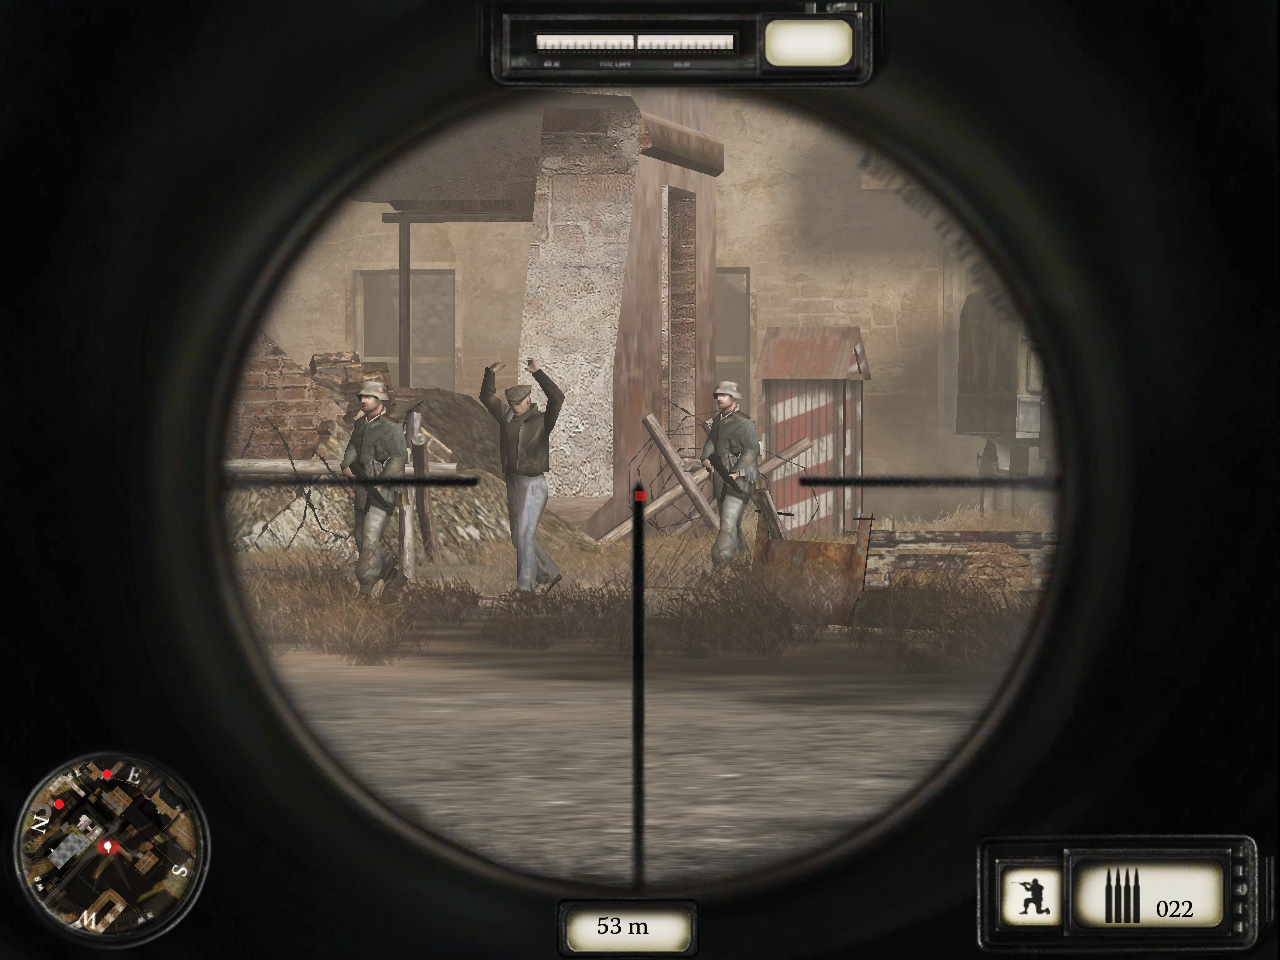 Sniper Art of Victory screenshot